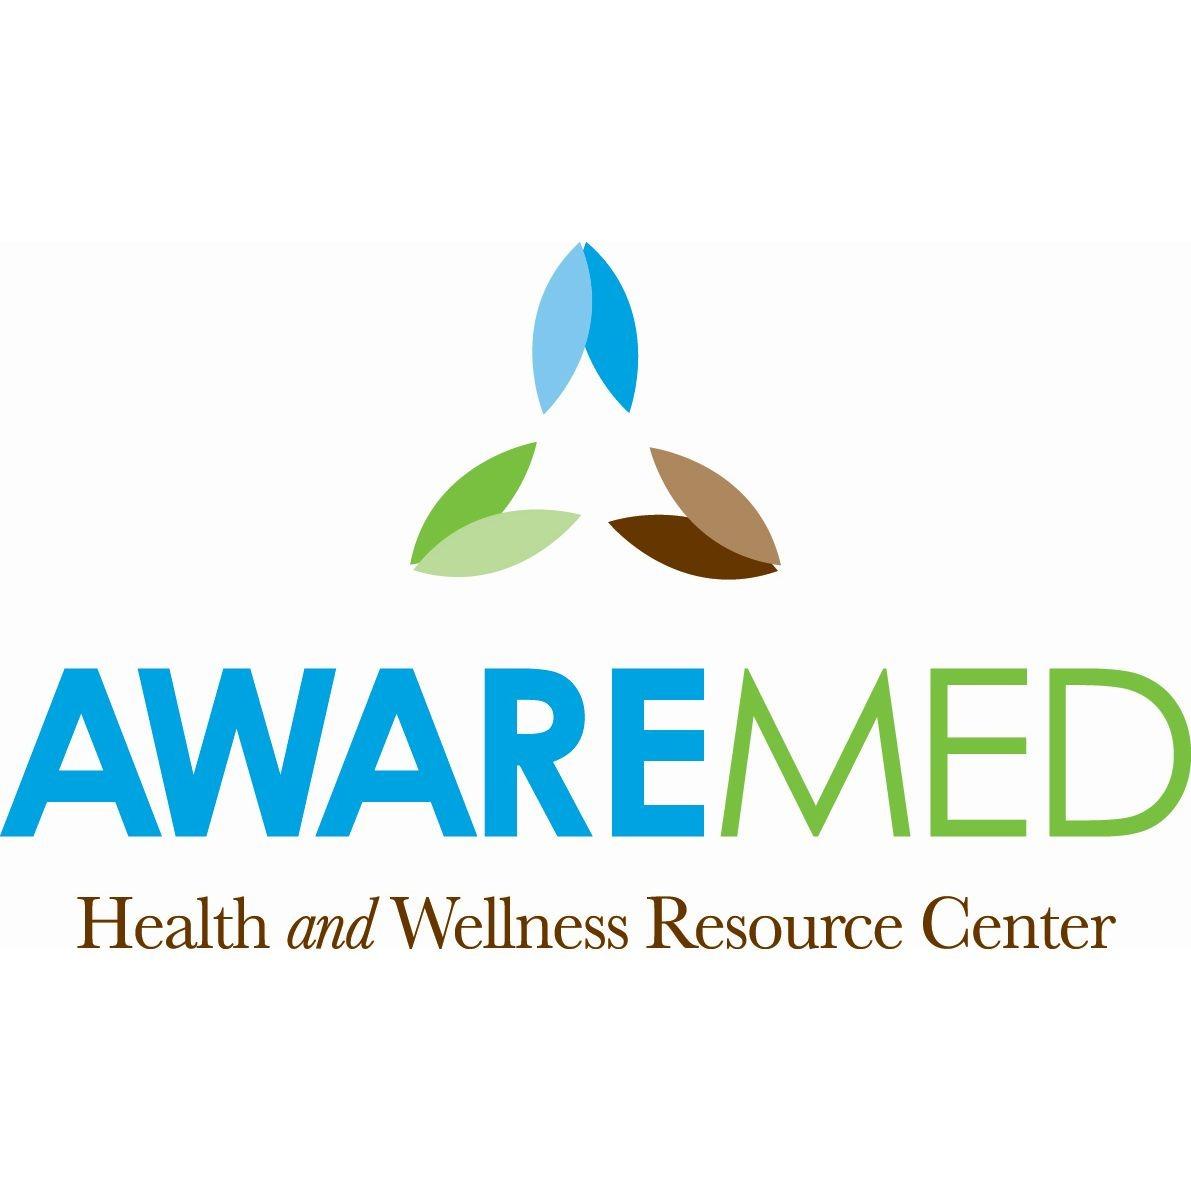 AWAREmed Health and Wellness Resource Center - Johnson City, TN 37604 - (423)430-6170 | ShowMeLocal.com